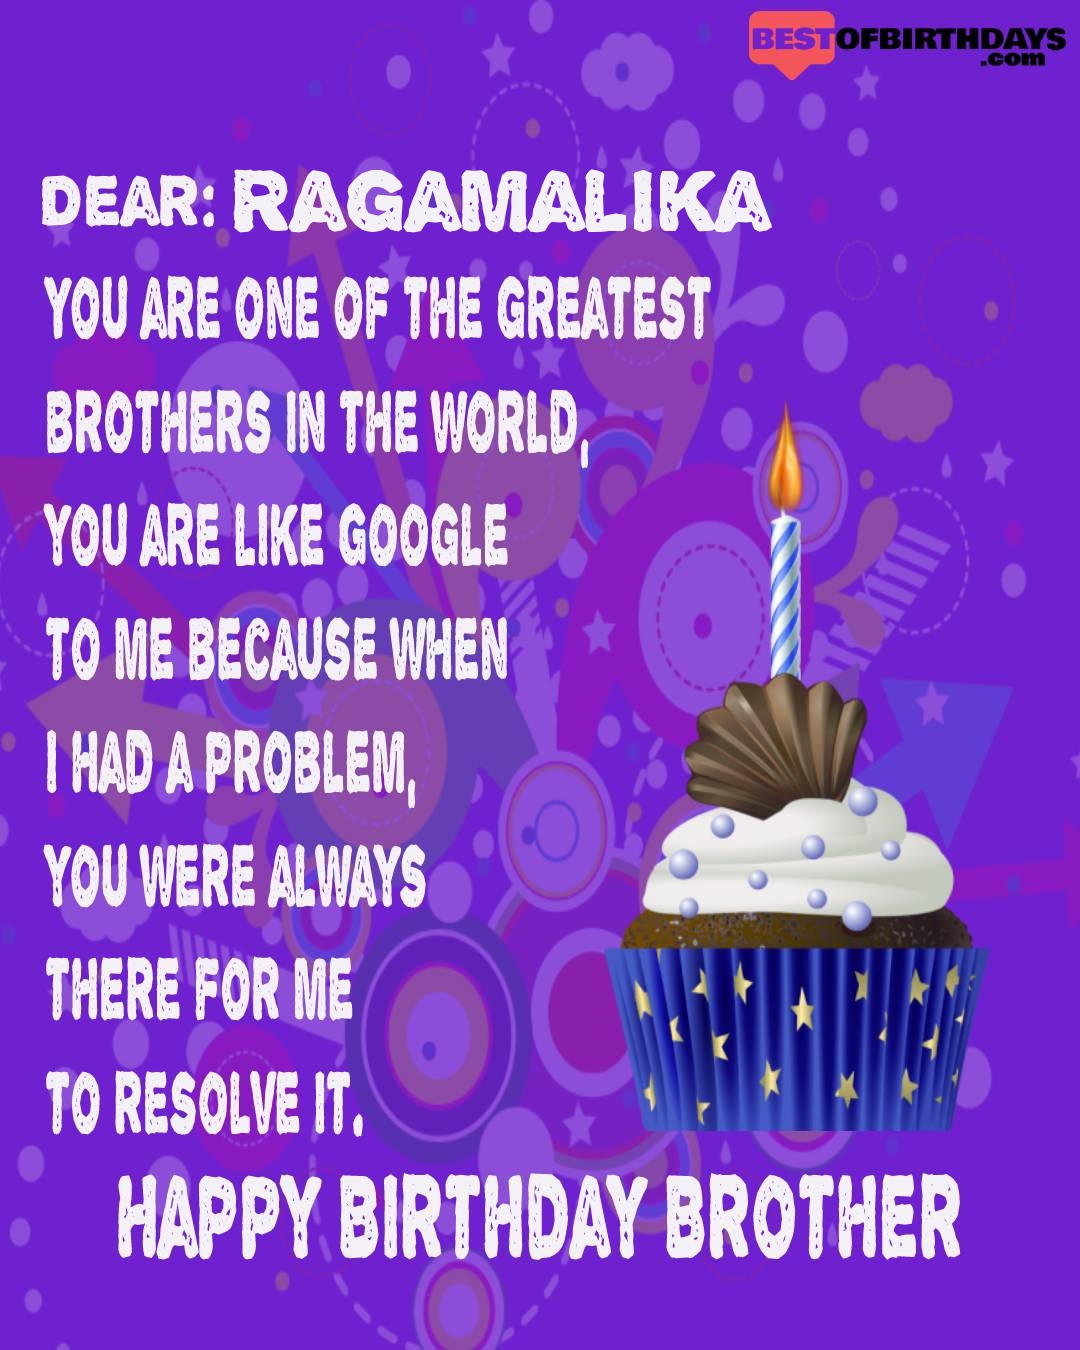 Happy birthday ragamalika bhai brother bro